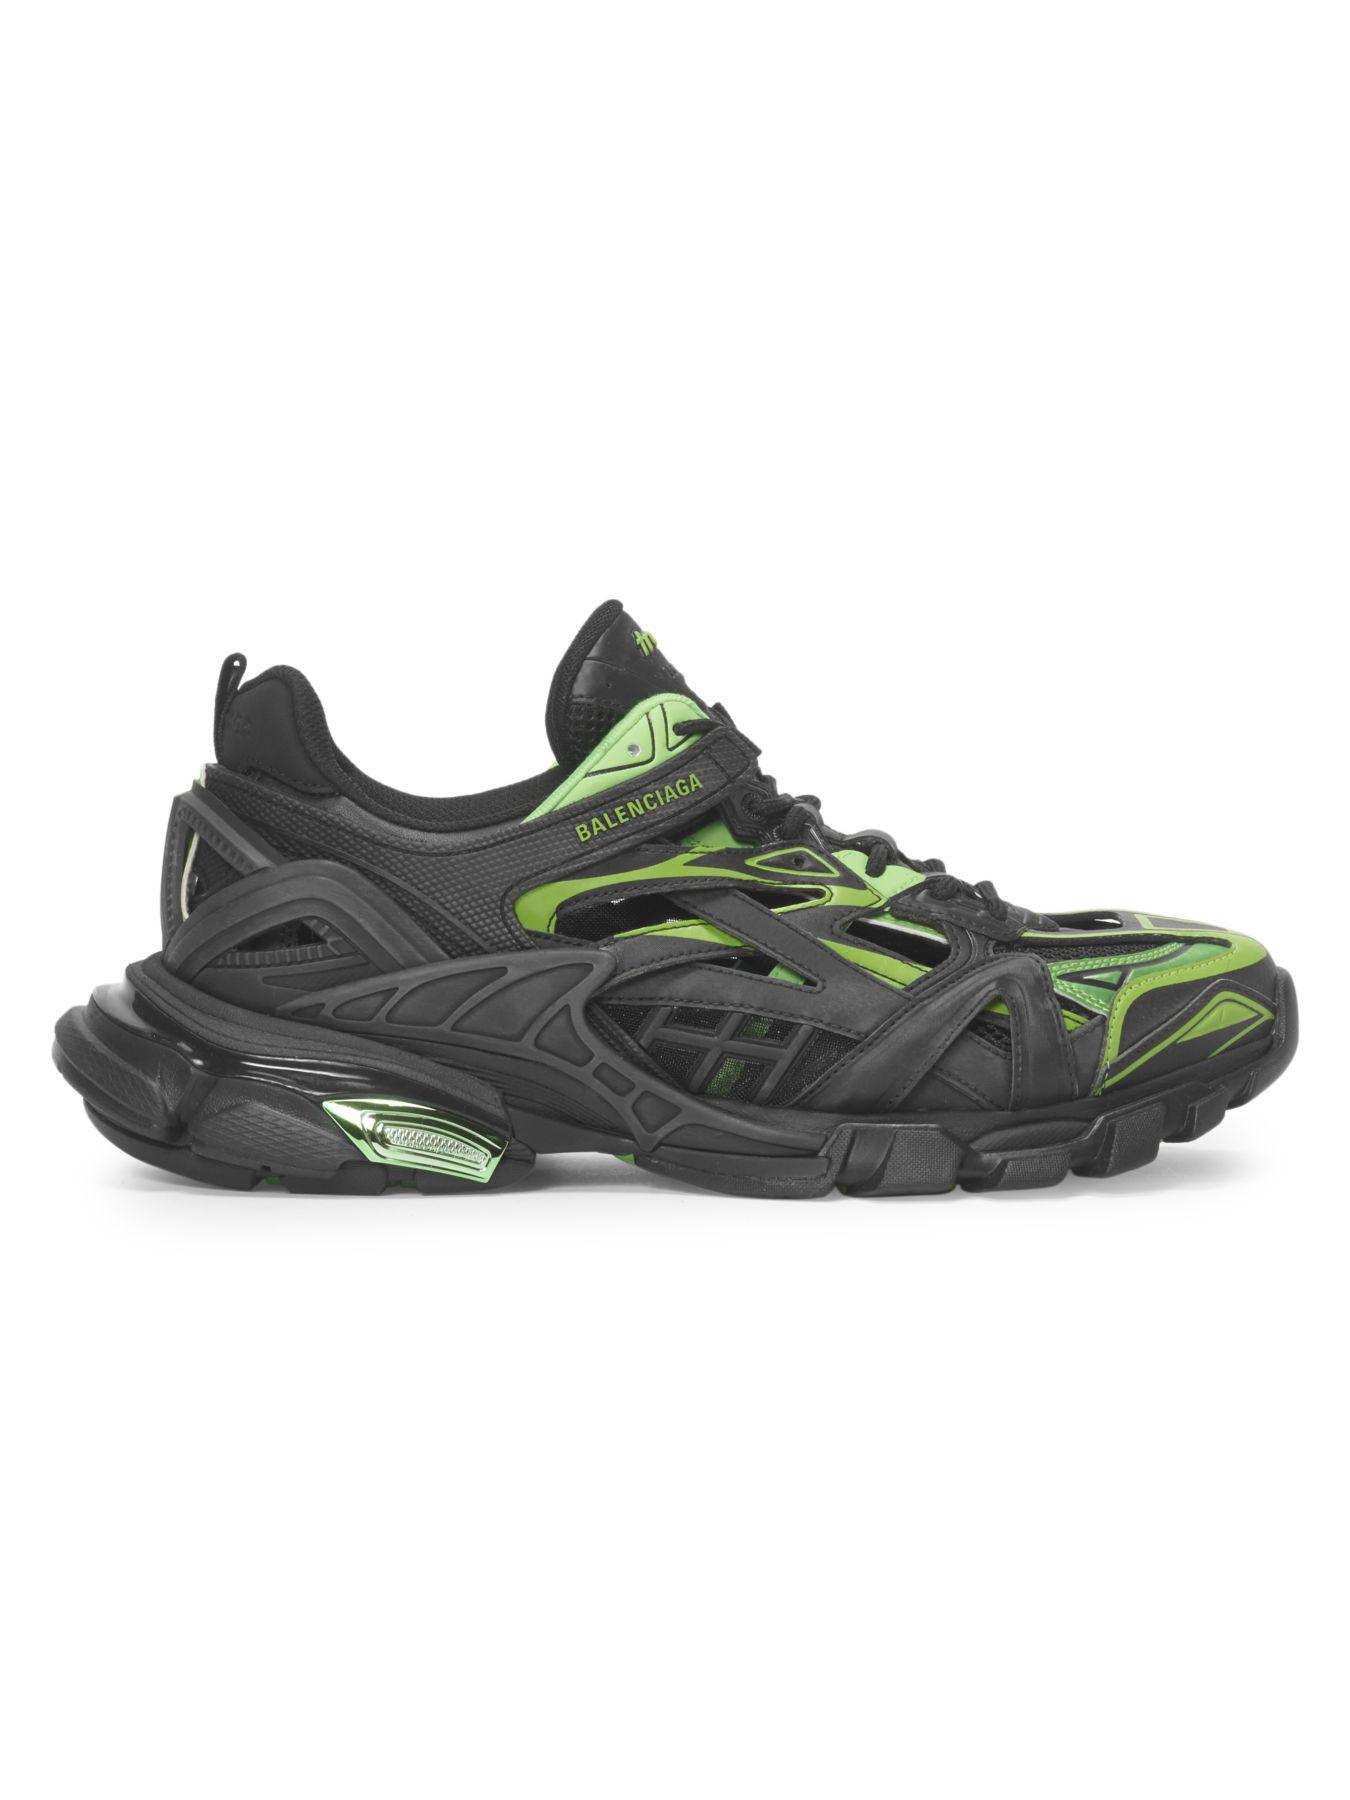 Balenciaga Track 2 Sneakers in Black Green (Green) for Men - Save 26% ...